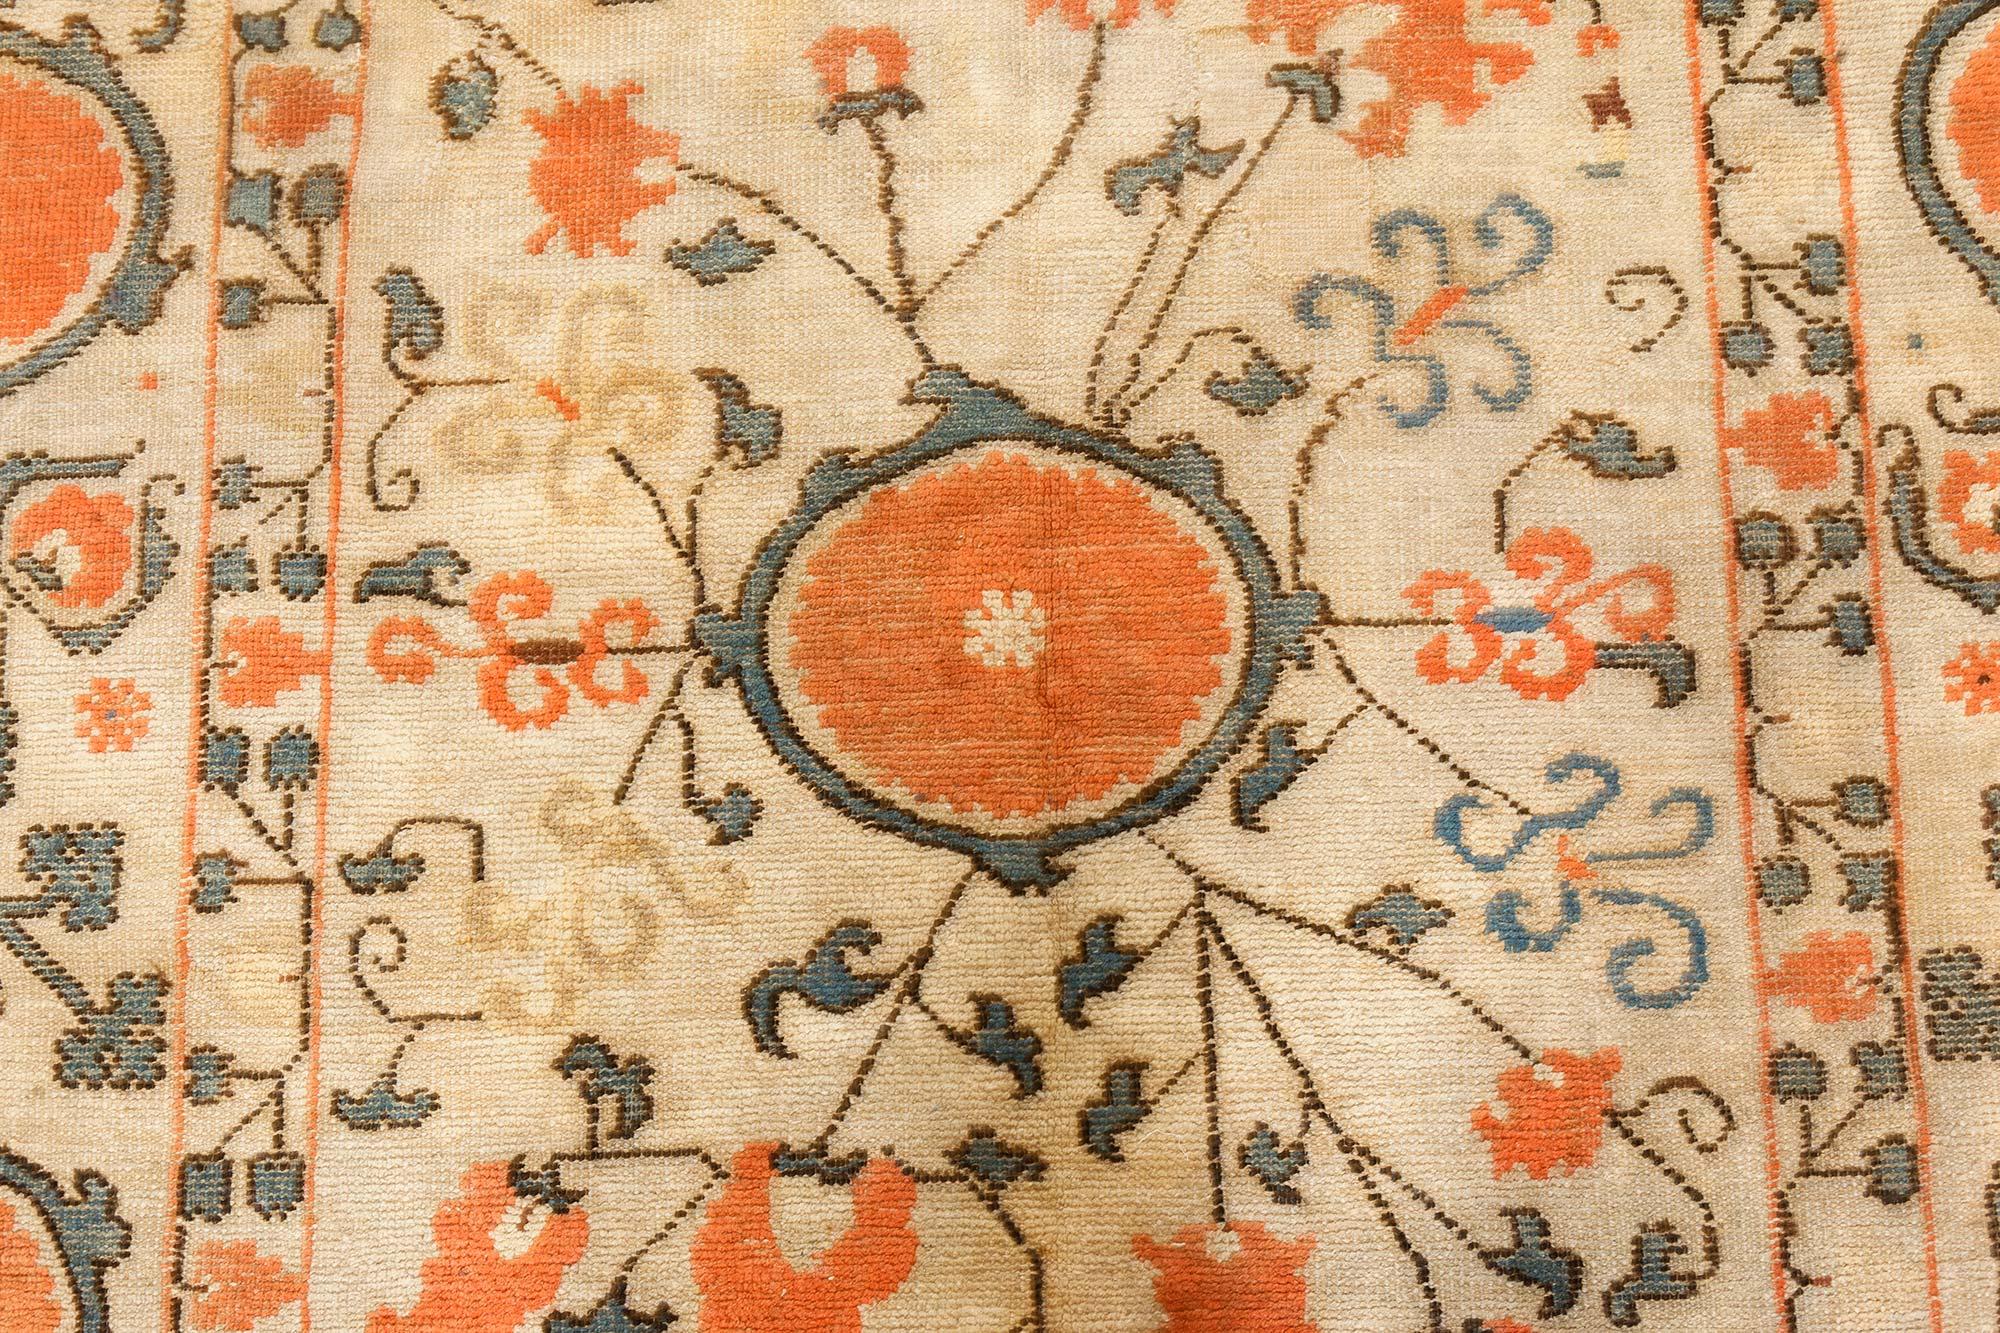 Vintage Samarkand 'Khotan' Orange Handmade Wool Carpet.
Size: 5'3